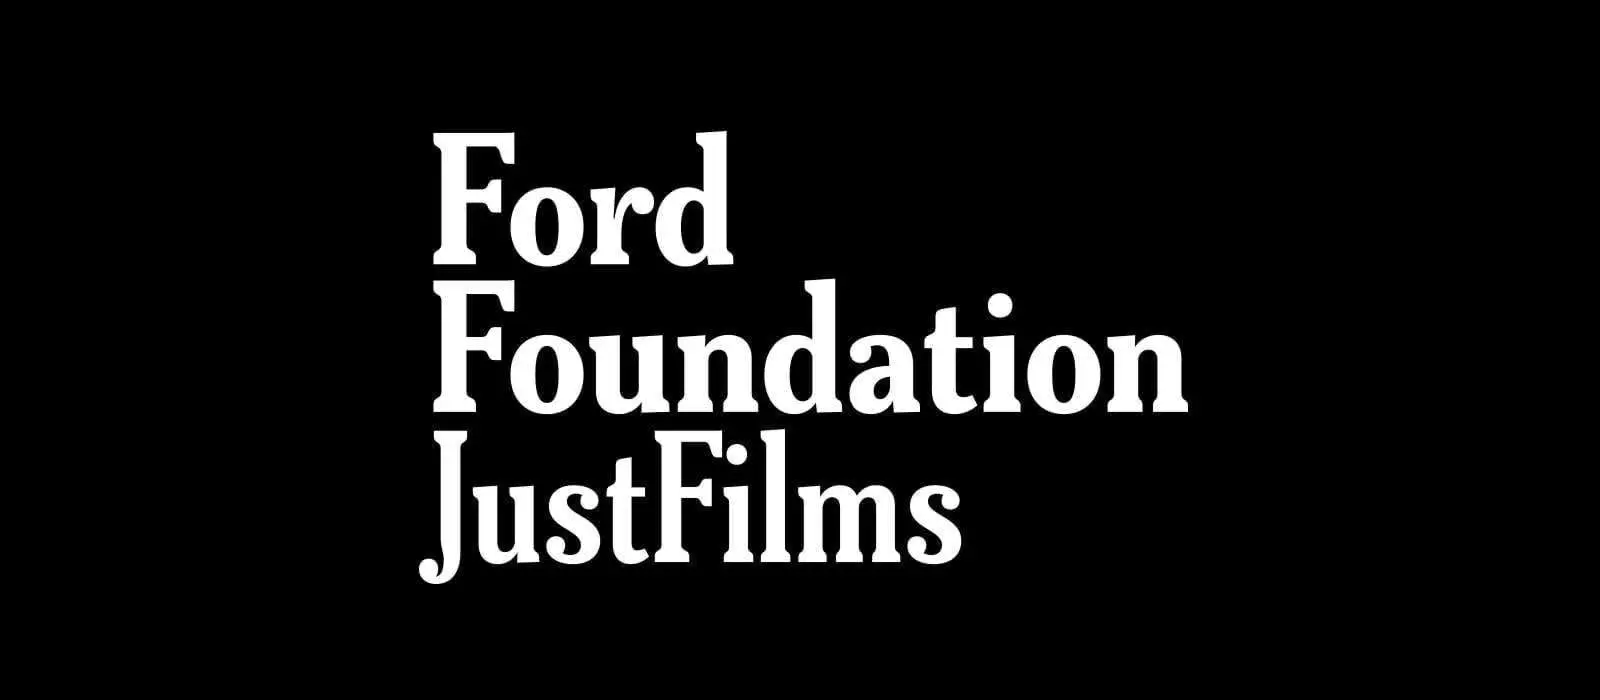 JustFilms logo - White